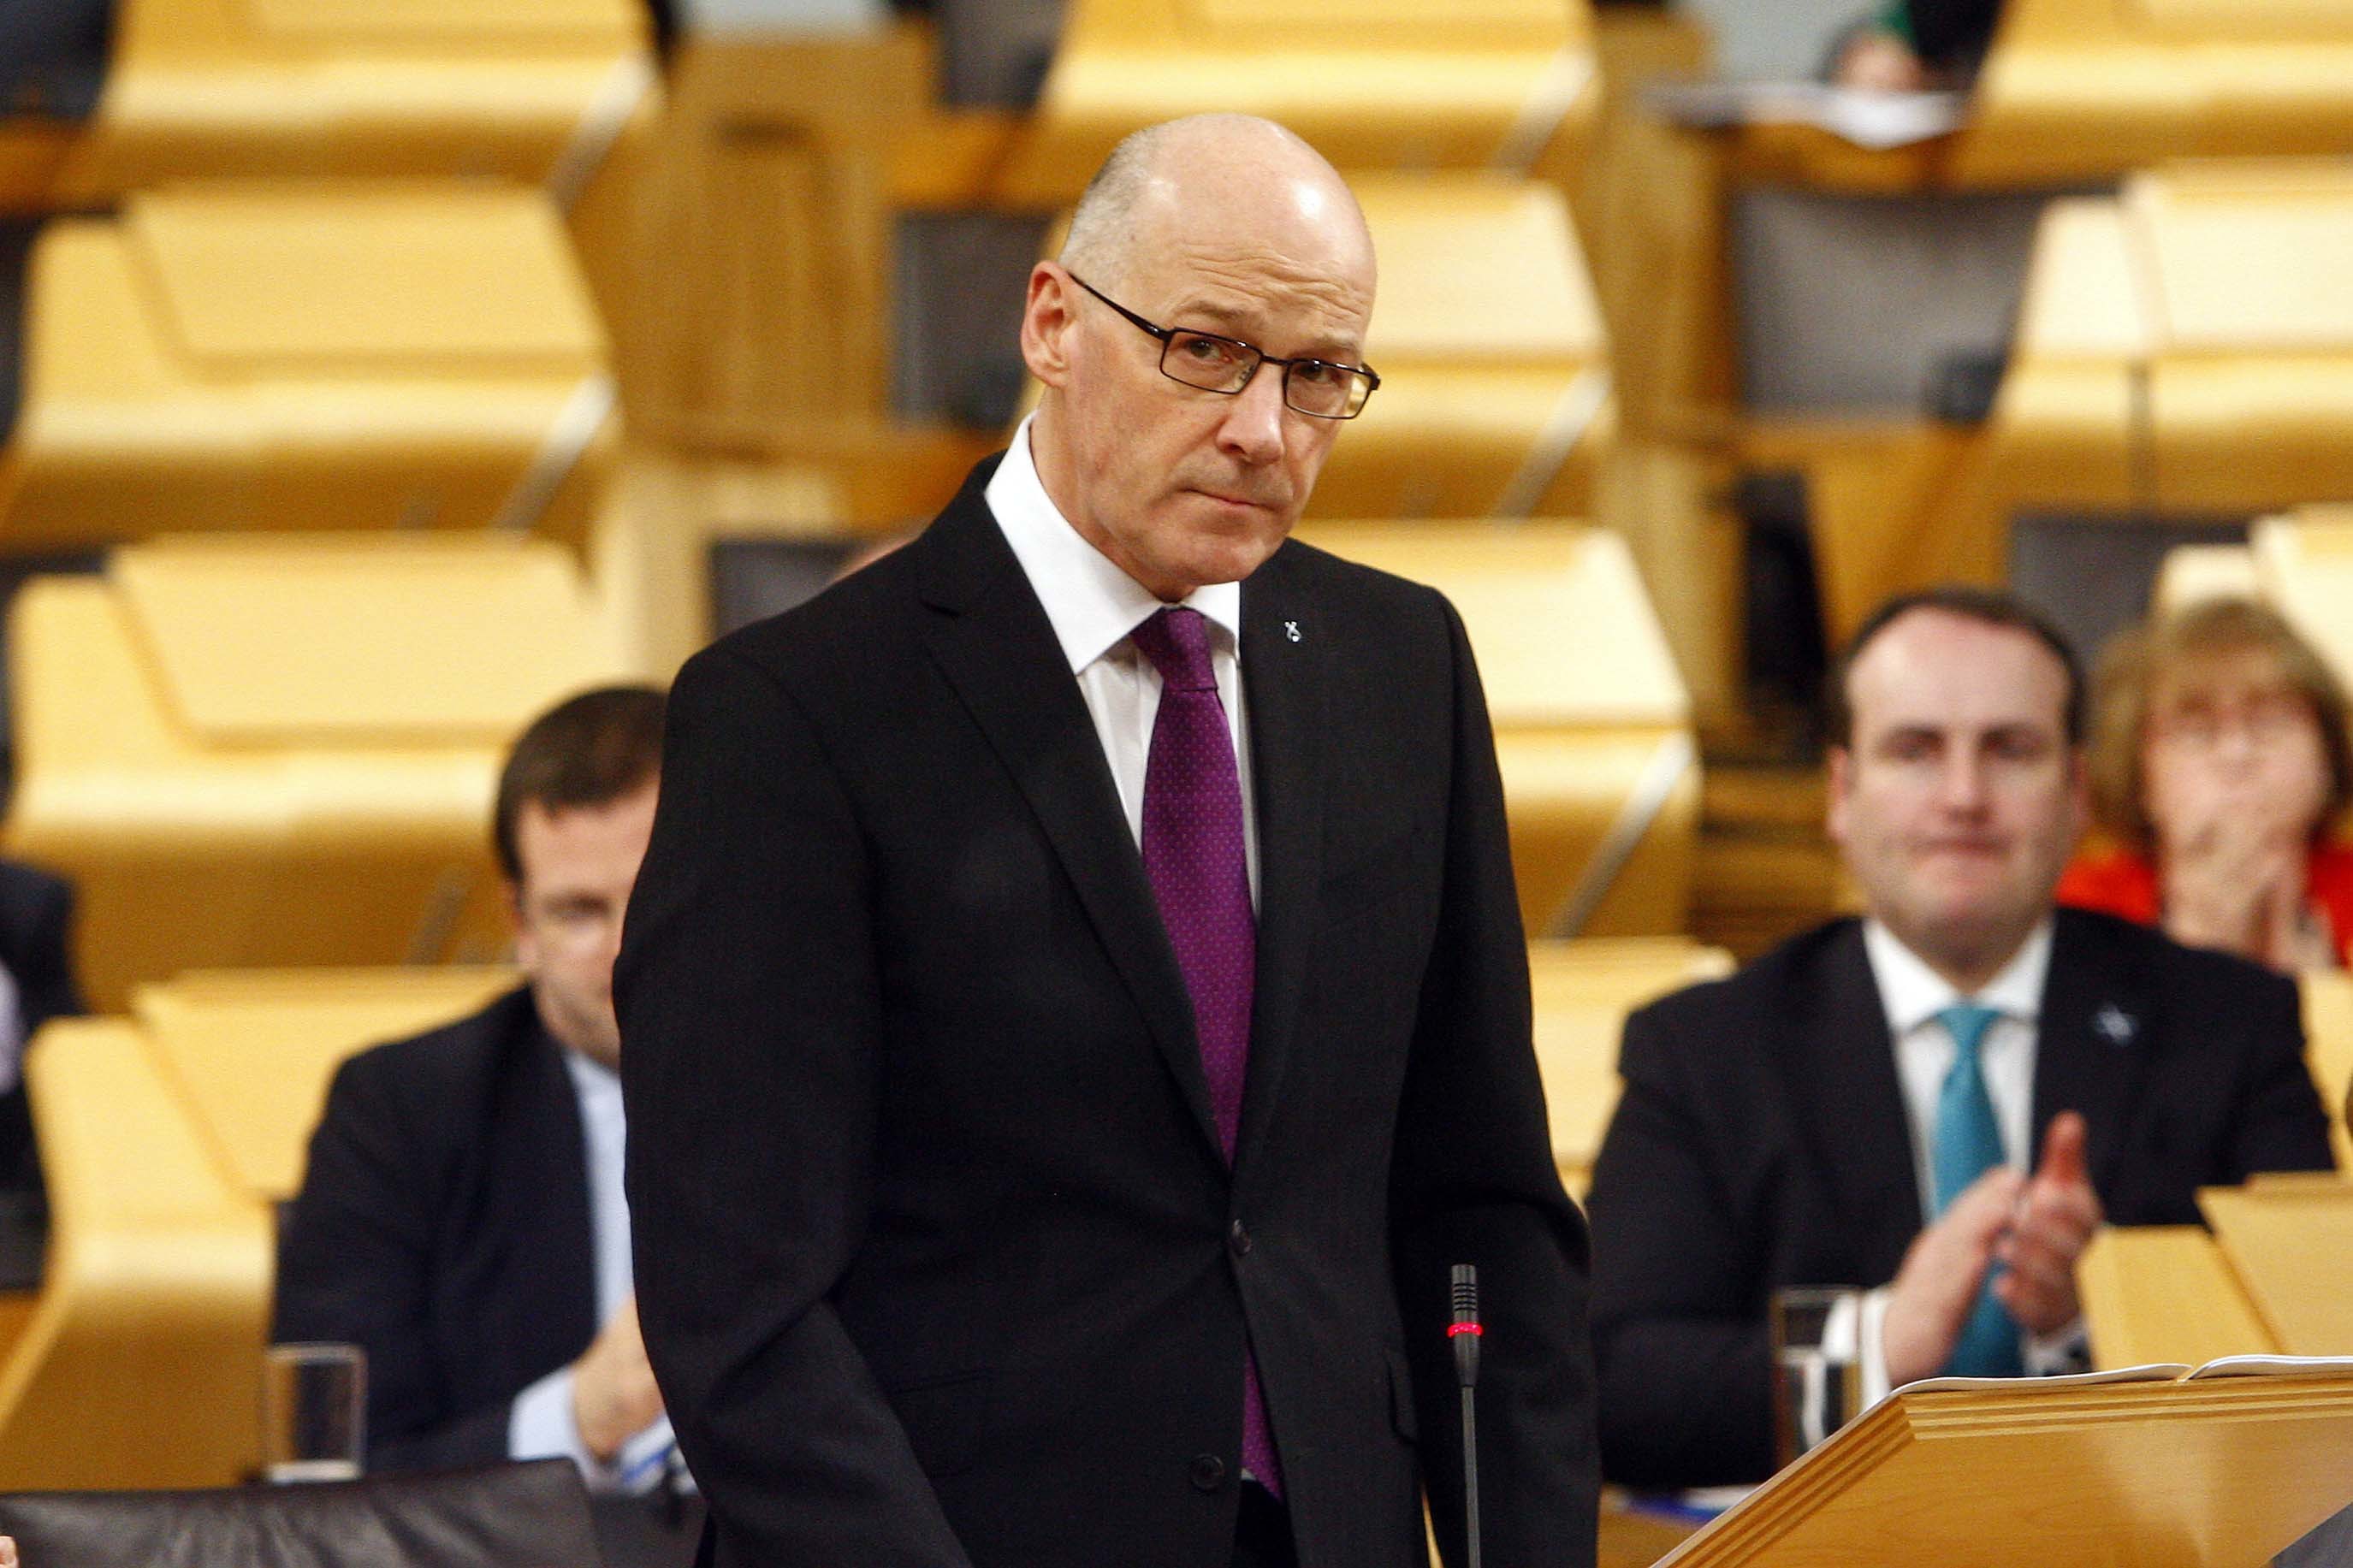 John Swinney (Andrew Cowan/Scottish Parliament)